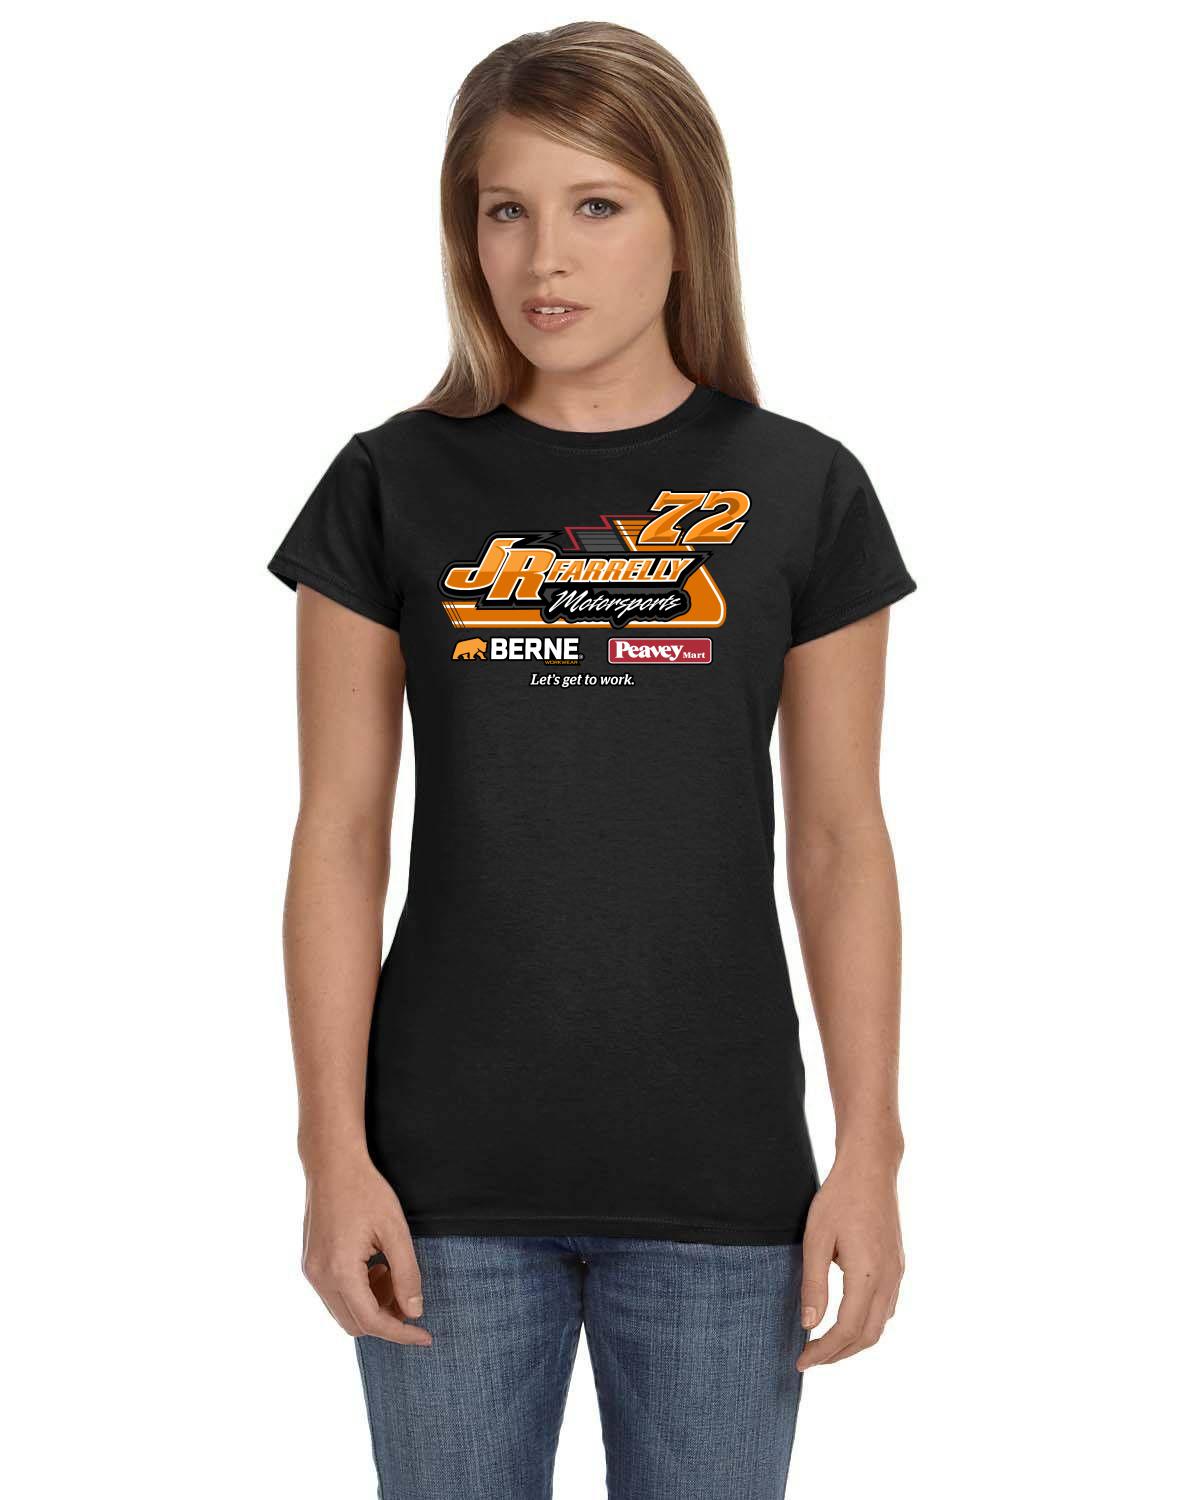 Jr. Farrelly Motorsports / BERNE-Peavey Racing Ladies' T-shirt